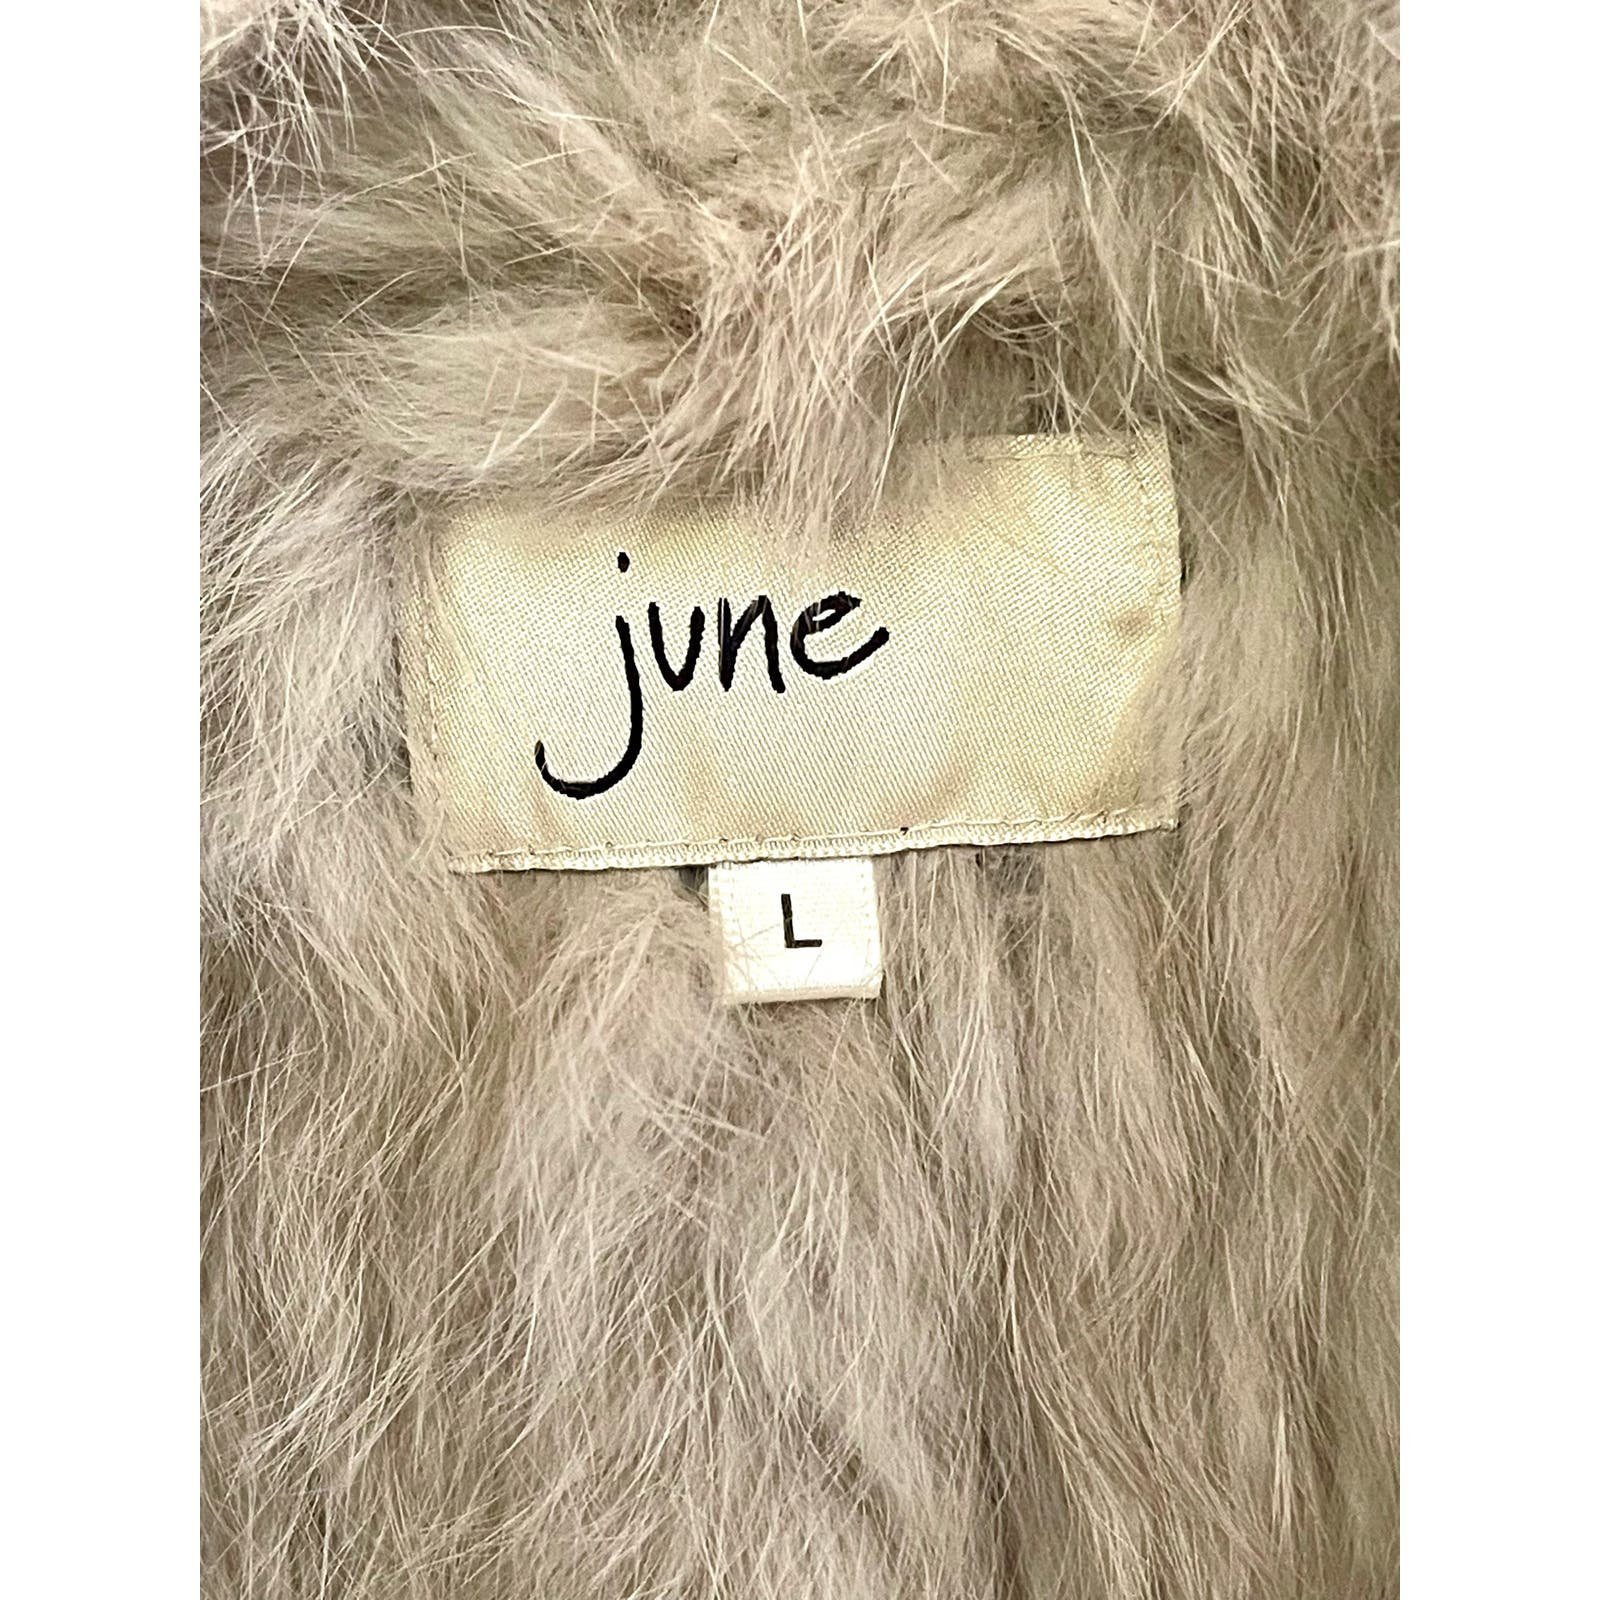 Wholesale price June Women’s Real Rabbit Soft Fur Sleeveless Vest size L PopmlnOWa Buying Cheap